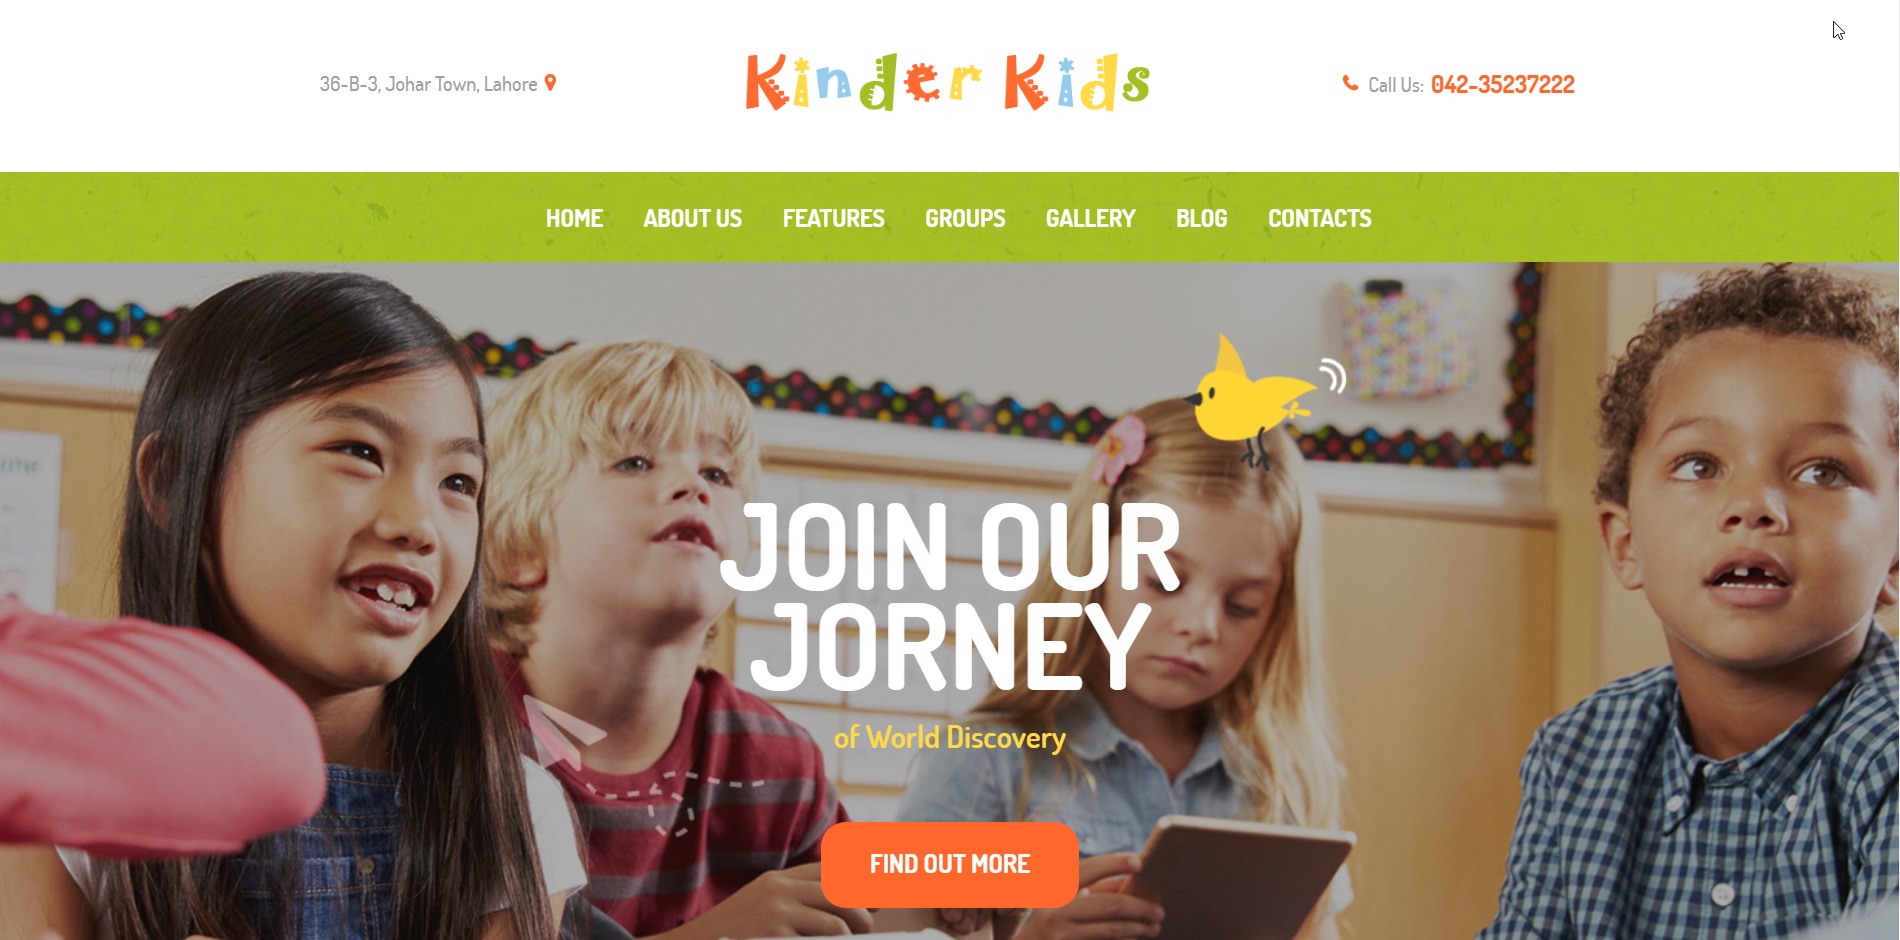 Kinder Kids Daycare and Preschool